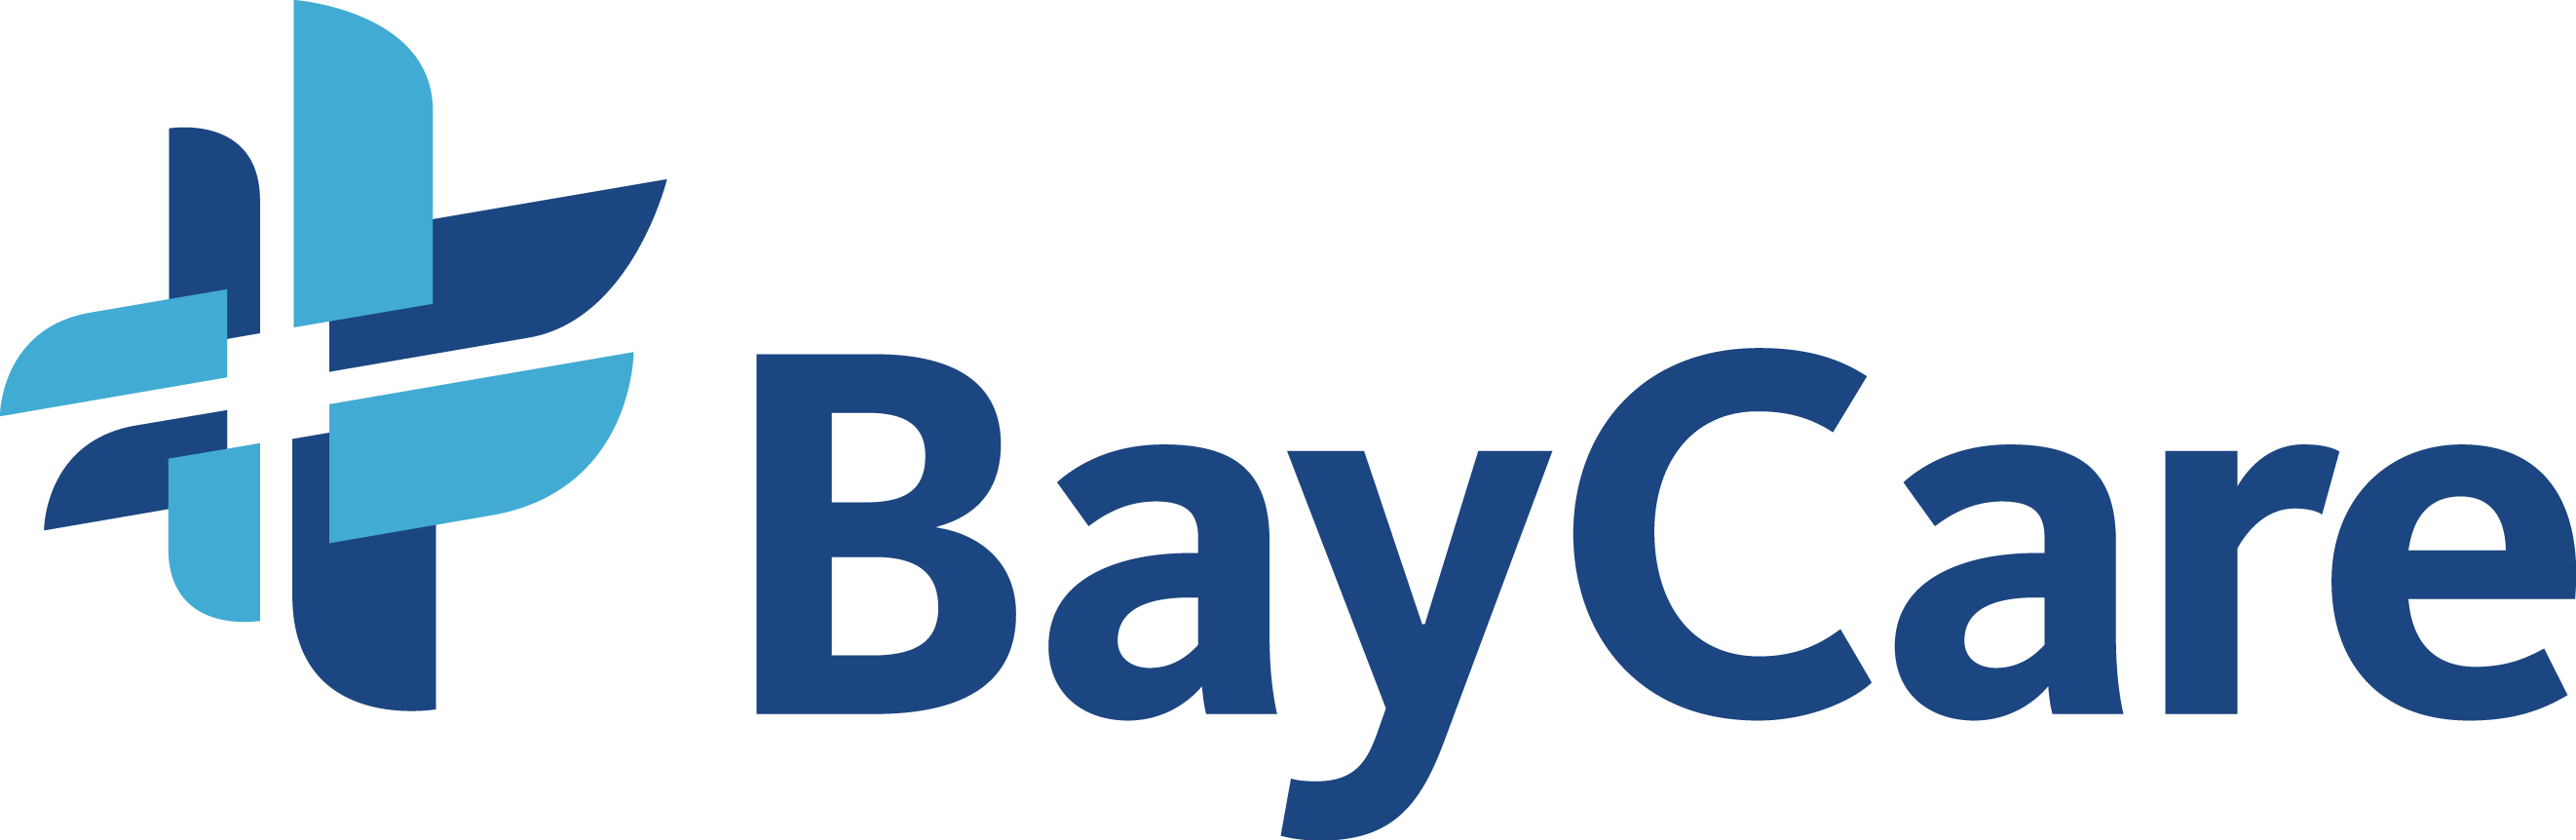 BayCare Health System logo